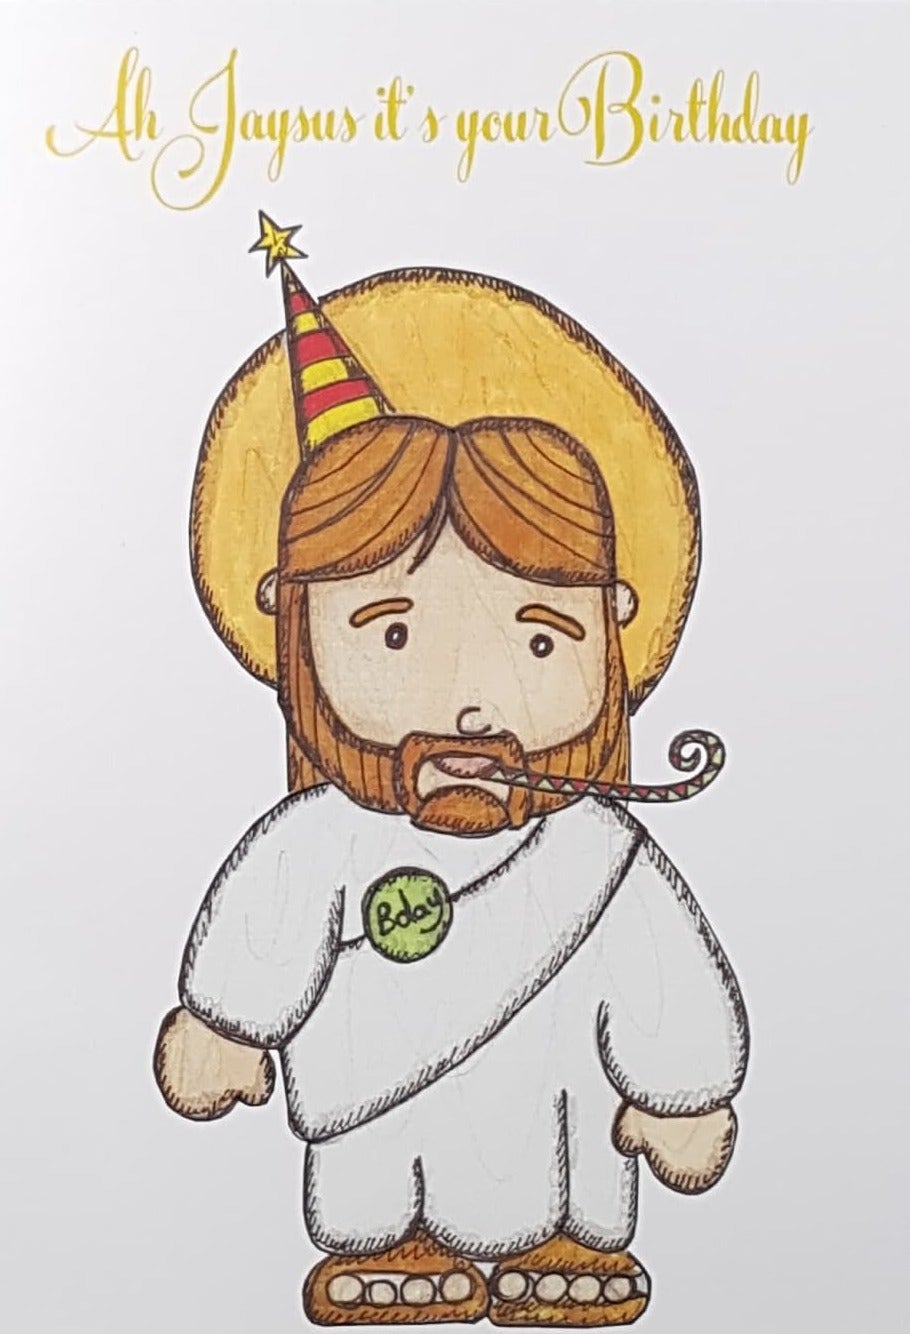 Dublin Card Company - A Jesus ( Birthday)